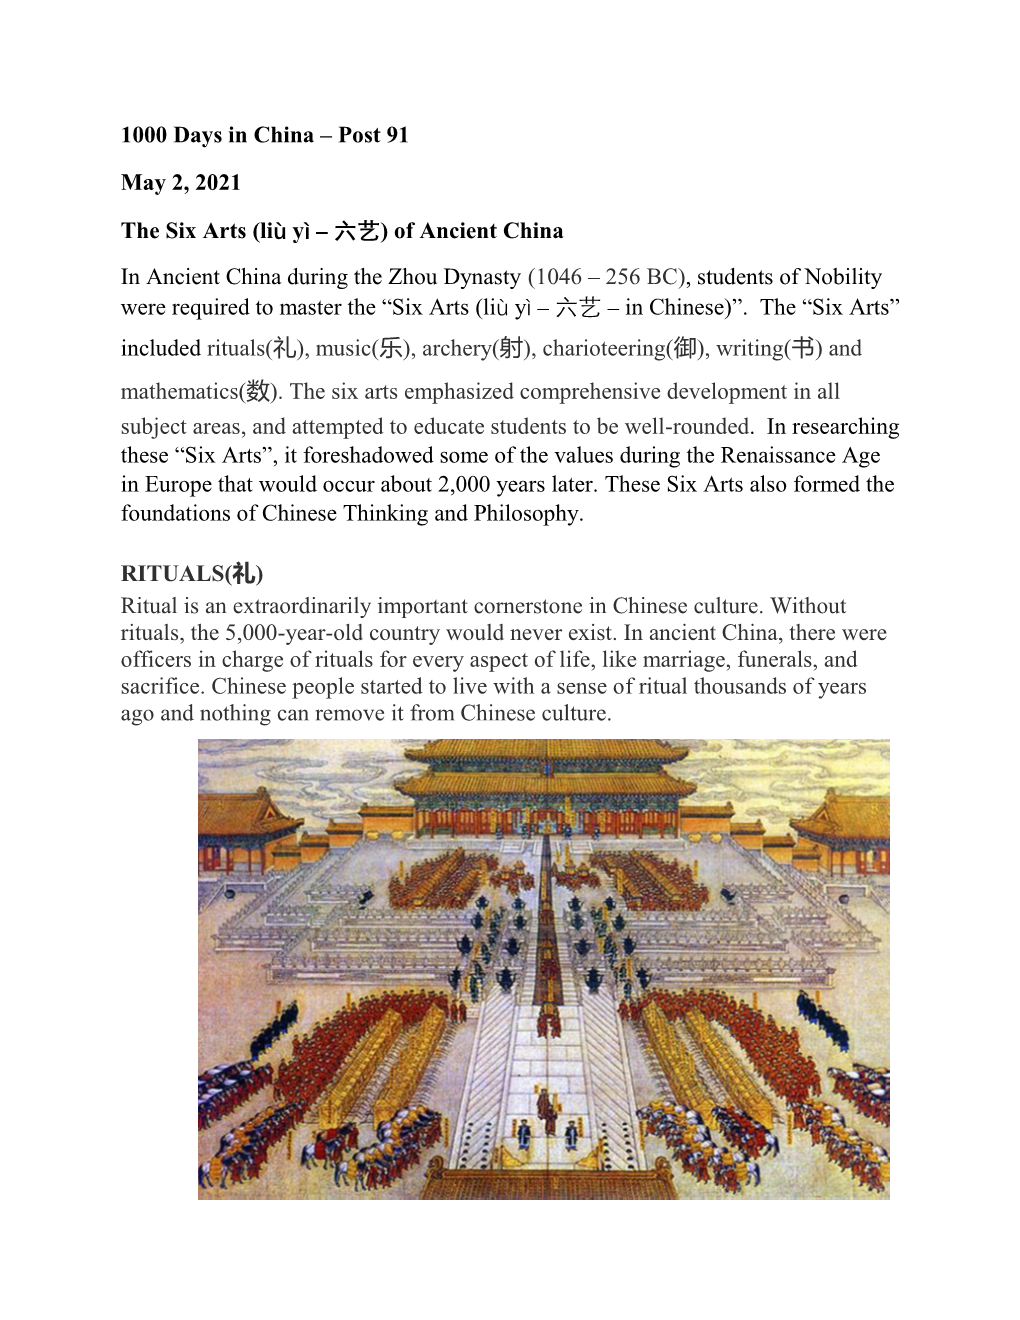 Post 91 the Six Arts of Ancient China